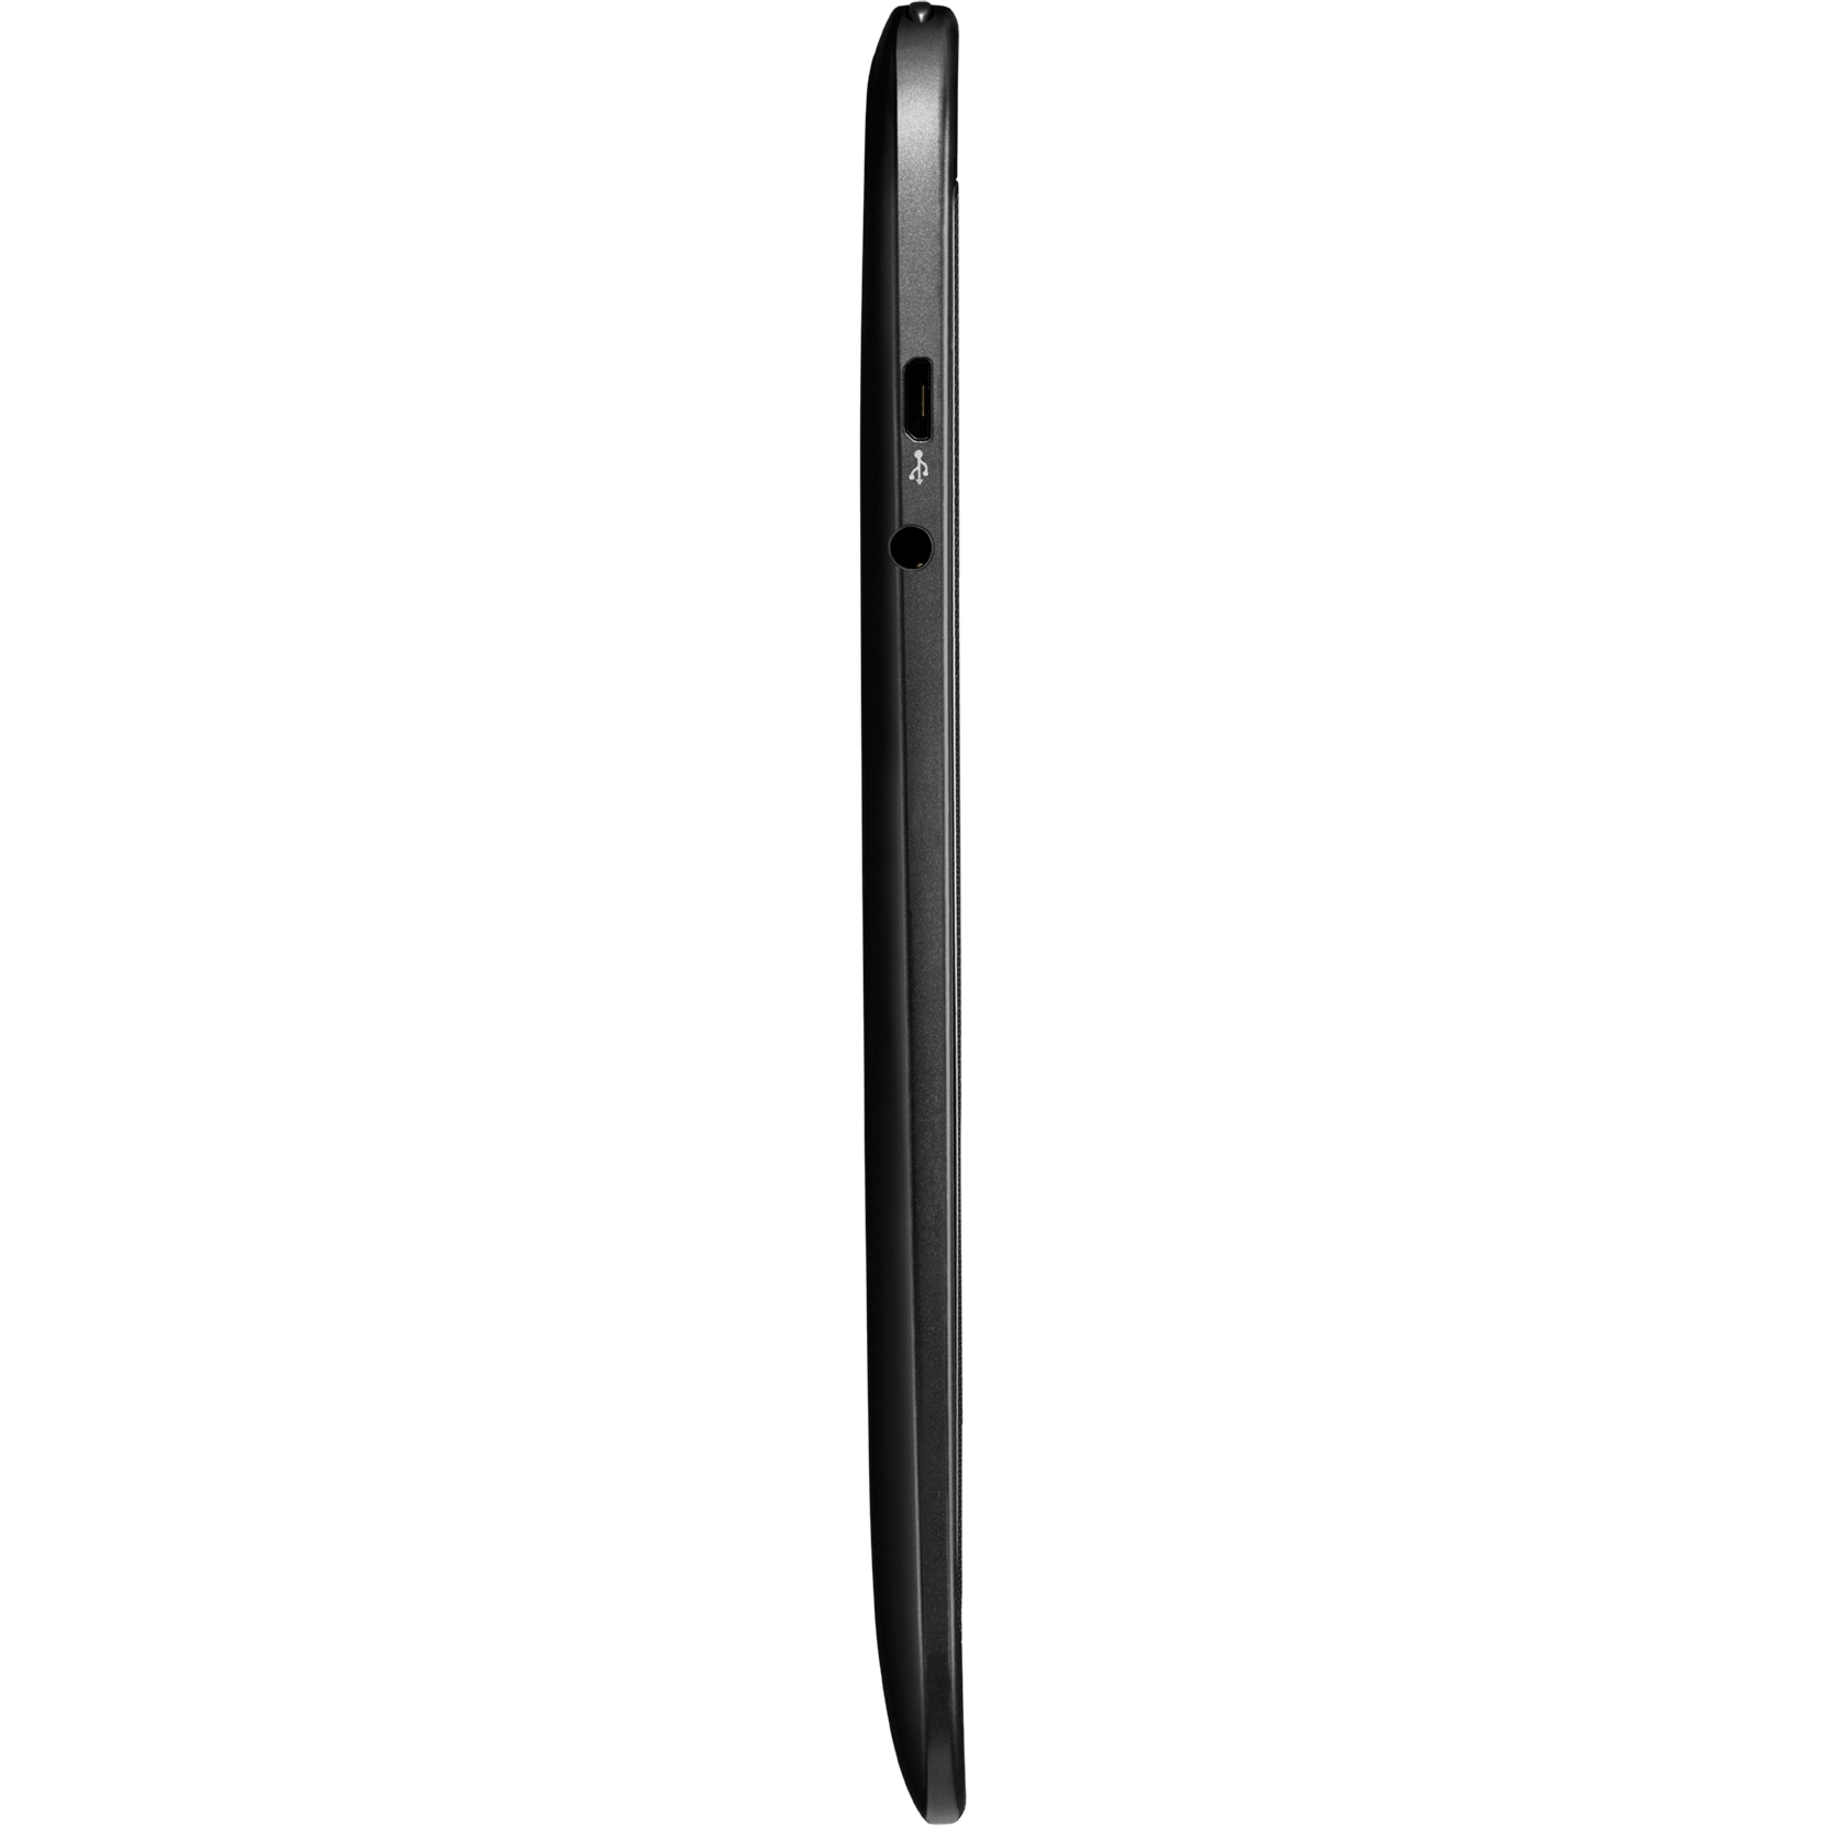 Samsung Nexus 10 GT-P8110HAVXAR Tablet, 10" WQXGA, 2 GB, 32 GB Storage, Android 4.2 Jelly Bean, Gray - image 5 of 6